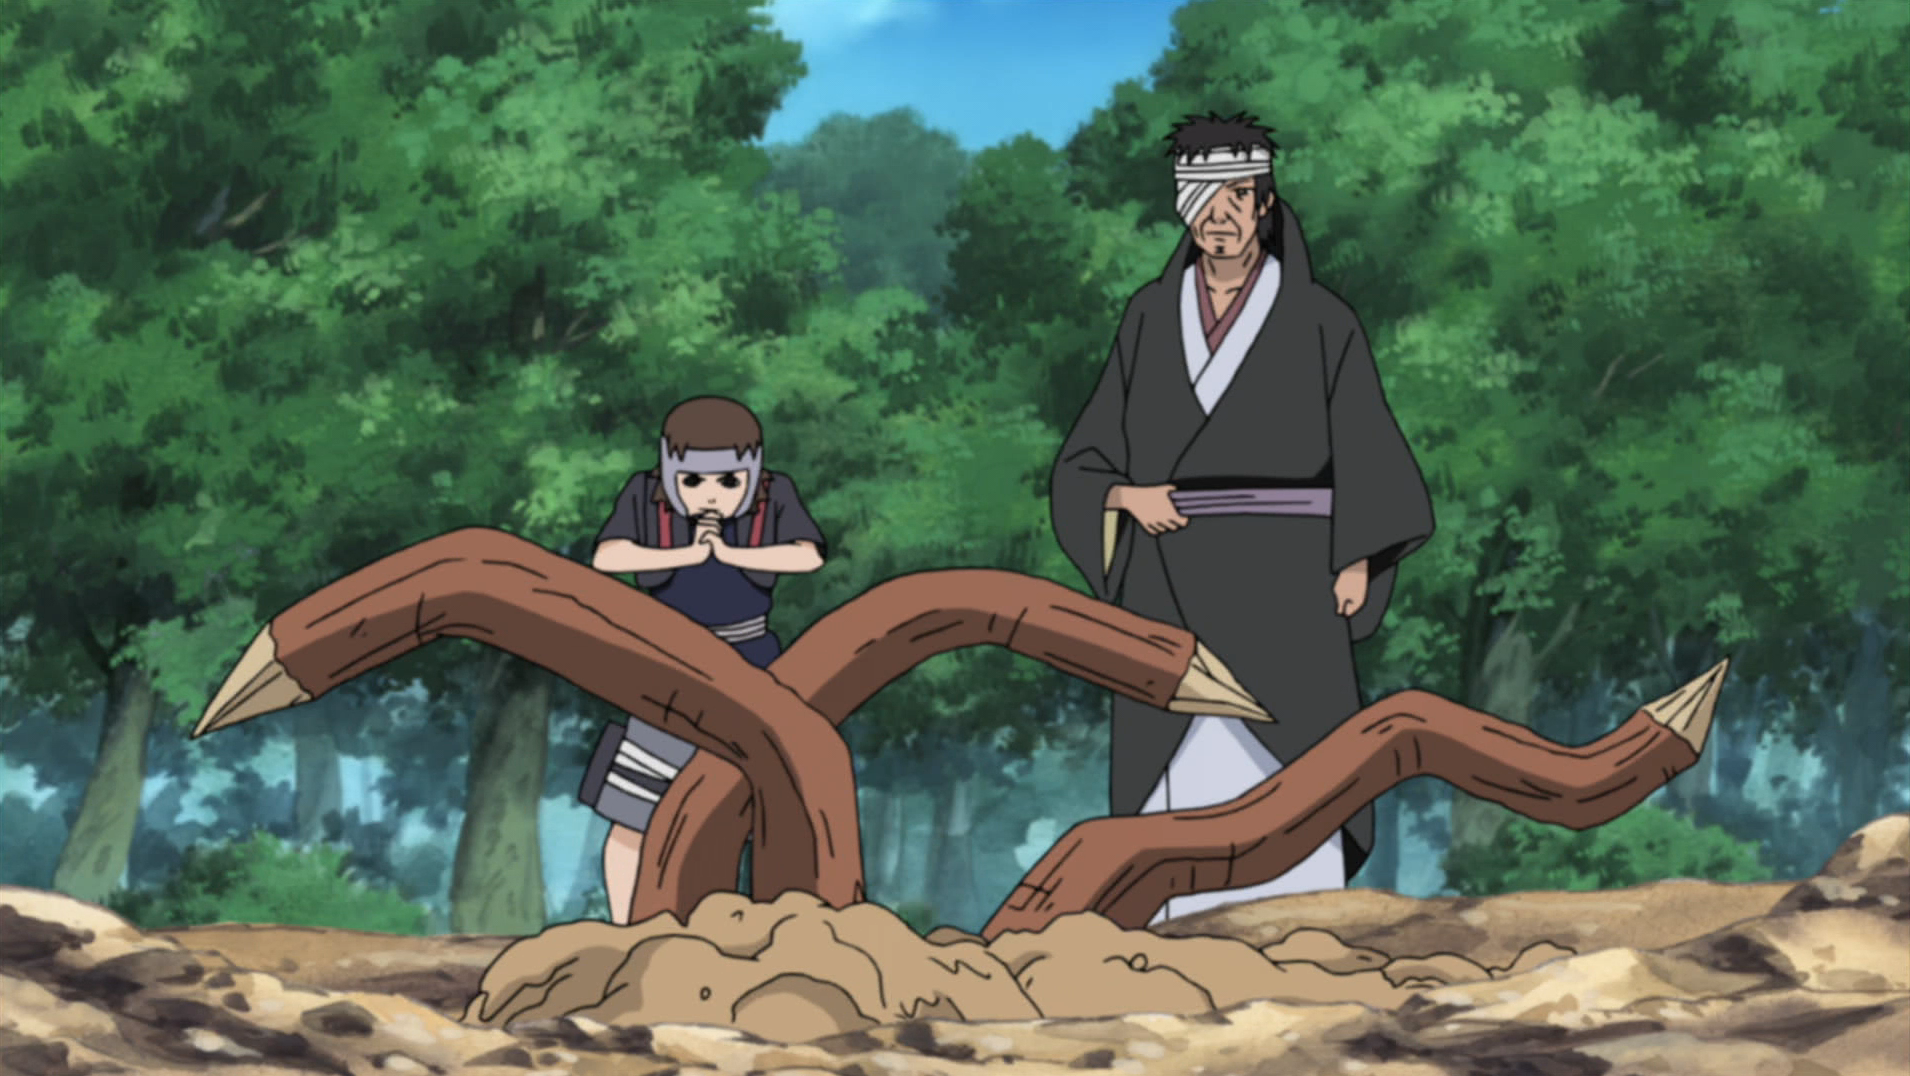 In Naruto Shippuden is Yamato Yukimi's brother Tenzo or did he